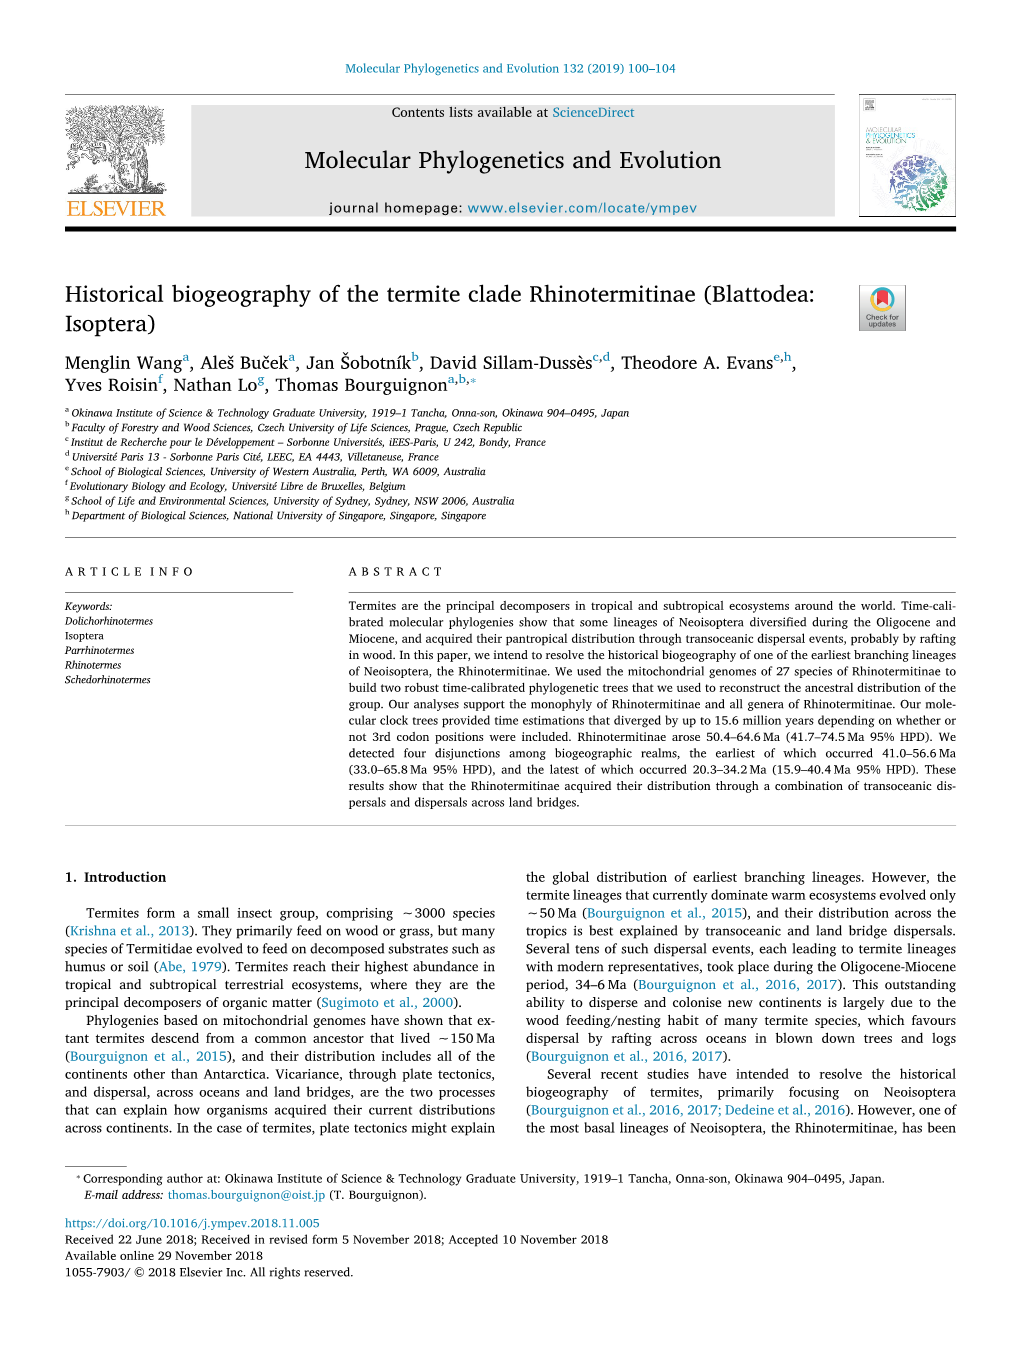 Historical Biogeography of the Termite Clade Rhinotermitinae (Blattodea